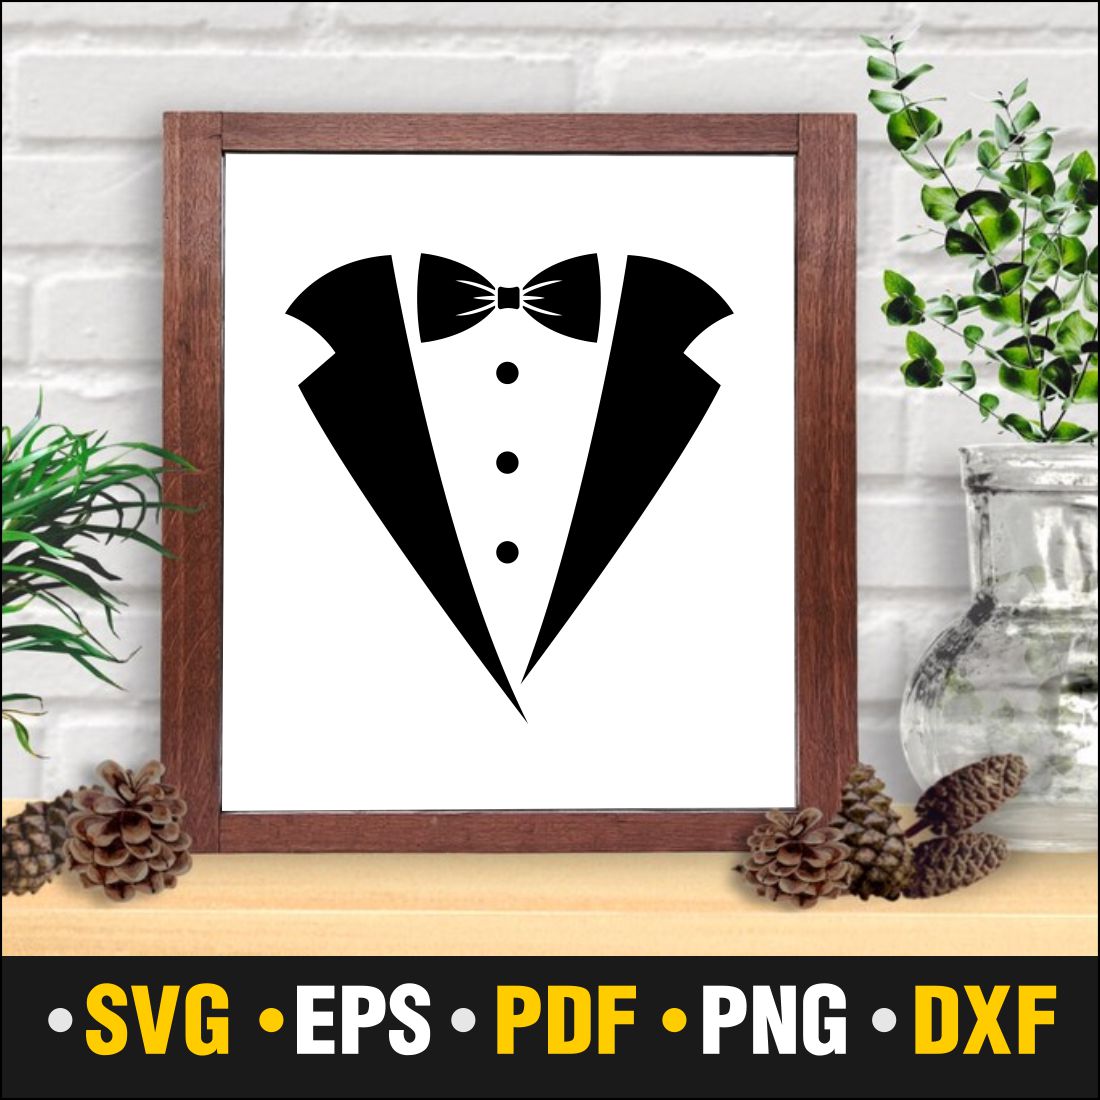 Tuxedo Svg, Bow Svg, Suit Svg Vector Cut file Cricut, Silhouette, Pdf Png, Dxf, Decal, Sticker, Stencil, Vinyl preview image.